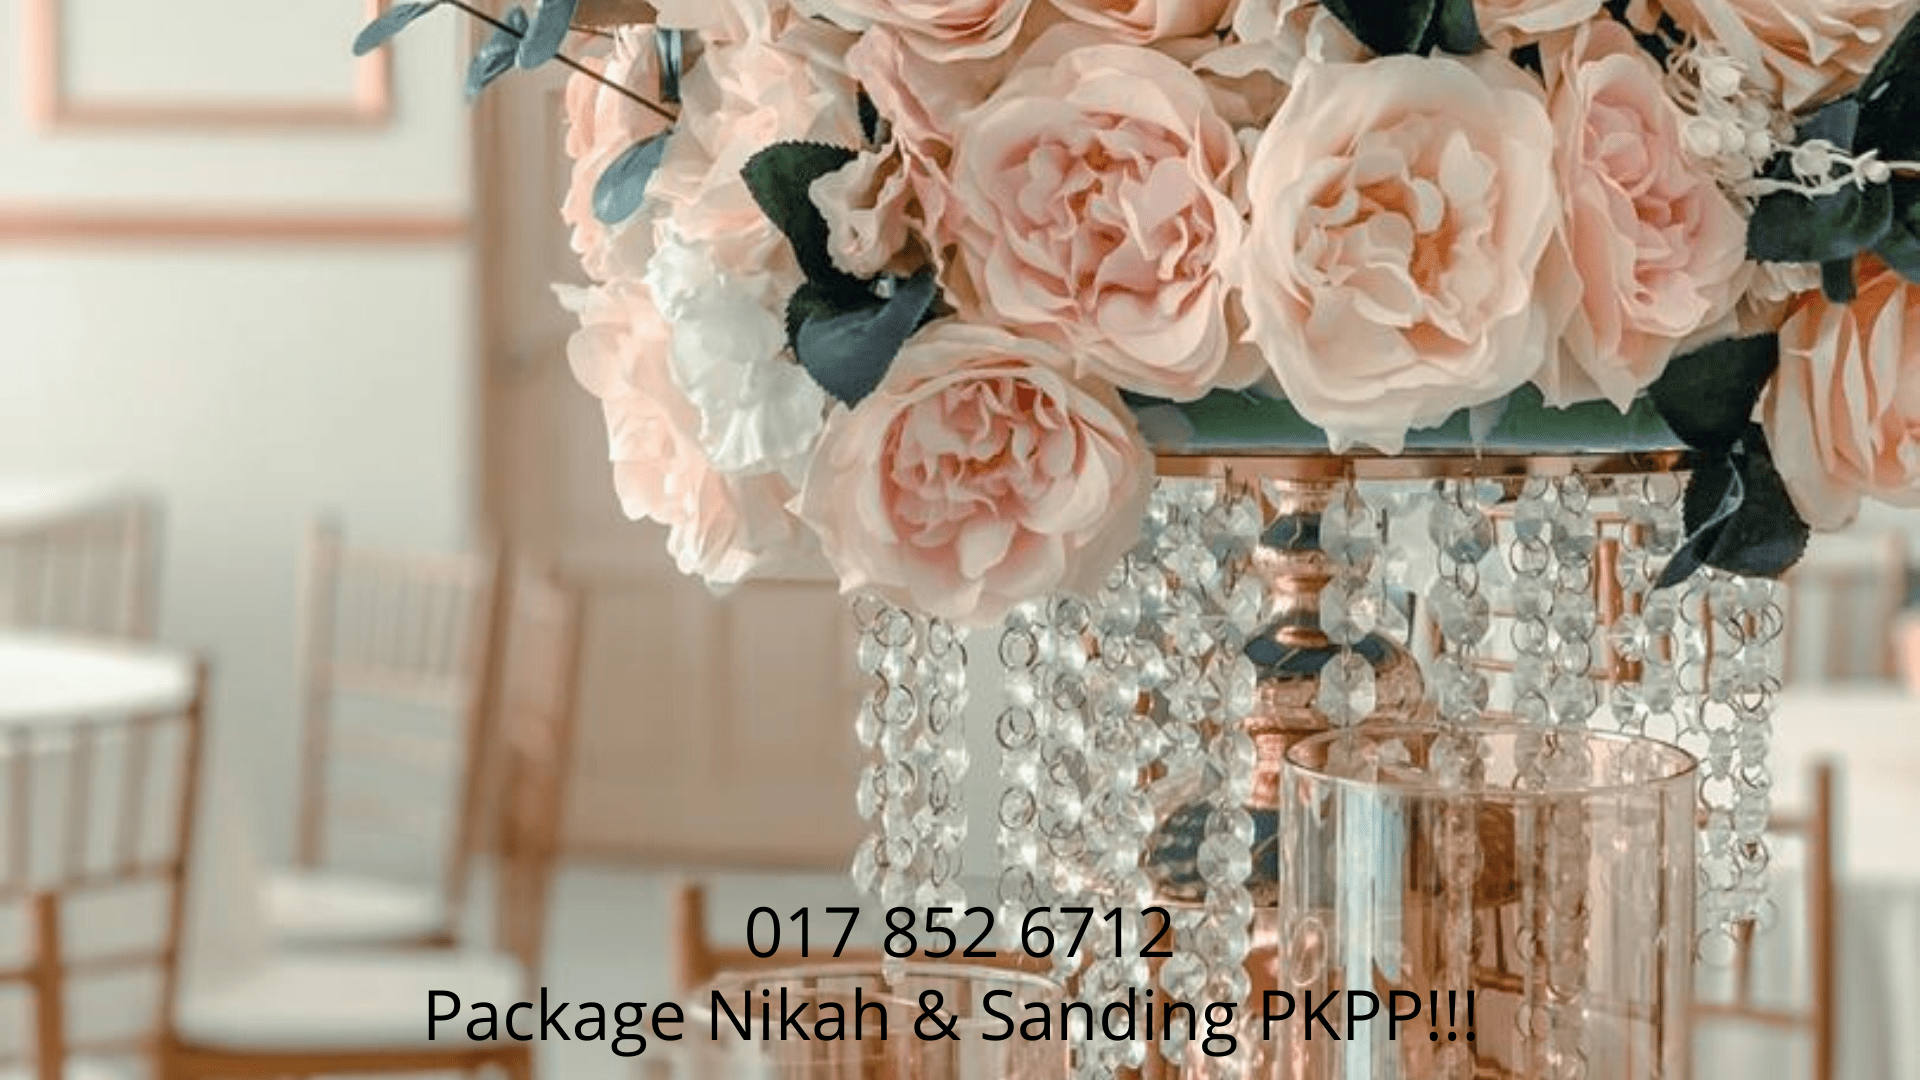 Package-Sanding-PKPP!!!-0178526712